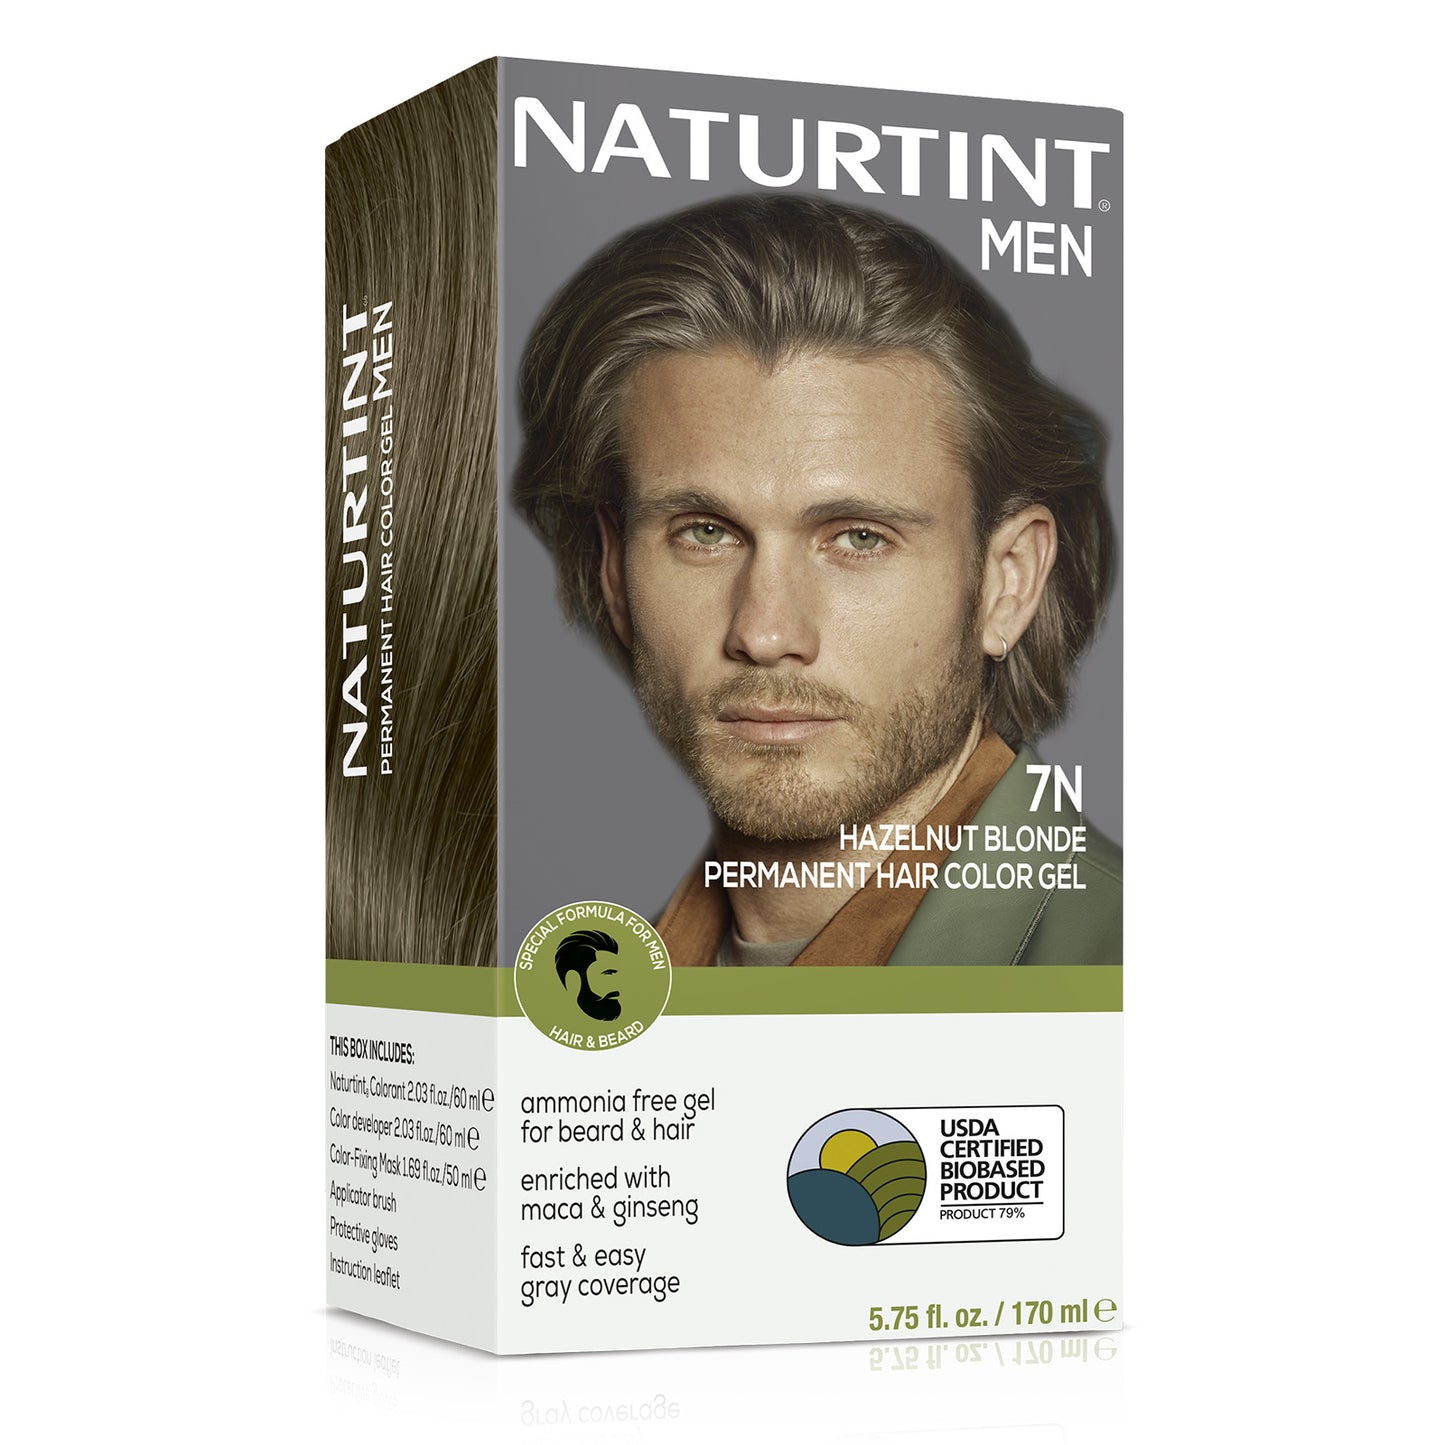 Naturtint Men's Permanent Hair Color 7N Hazelnut Blonde